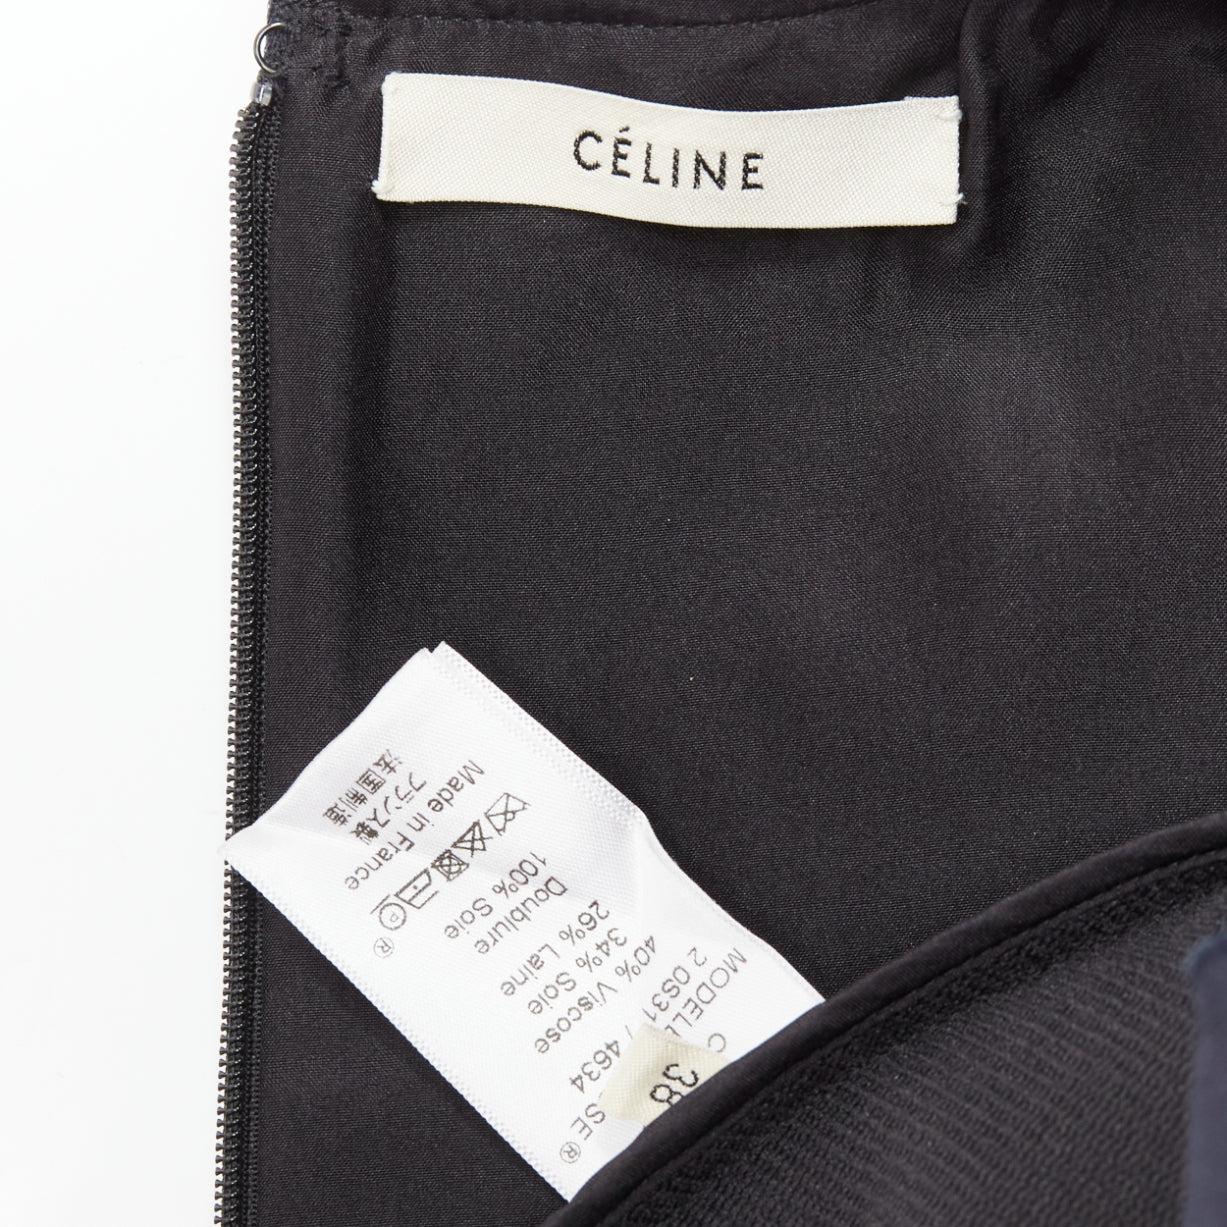 OLD CELINE Phoebe Philo Runway black twist knot splice cropped vest top FR38 M For Sale 4